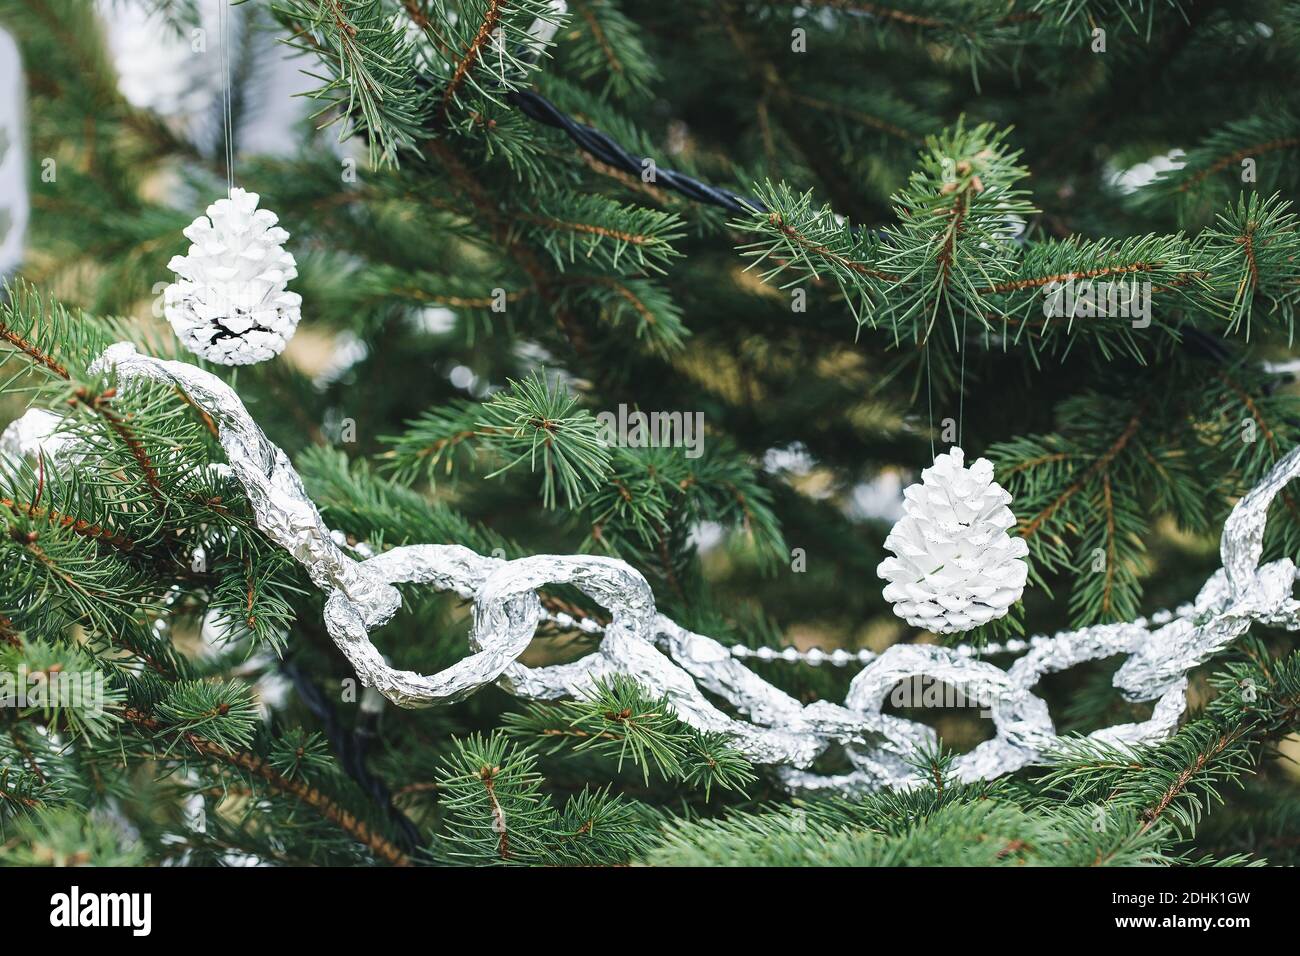 https://c8.alamy.com/comp/2DHK1GW/aluminium-foil-decoration-on-a-christmas-tree-2DHK1GW.jpg